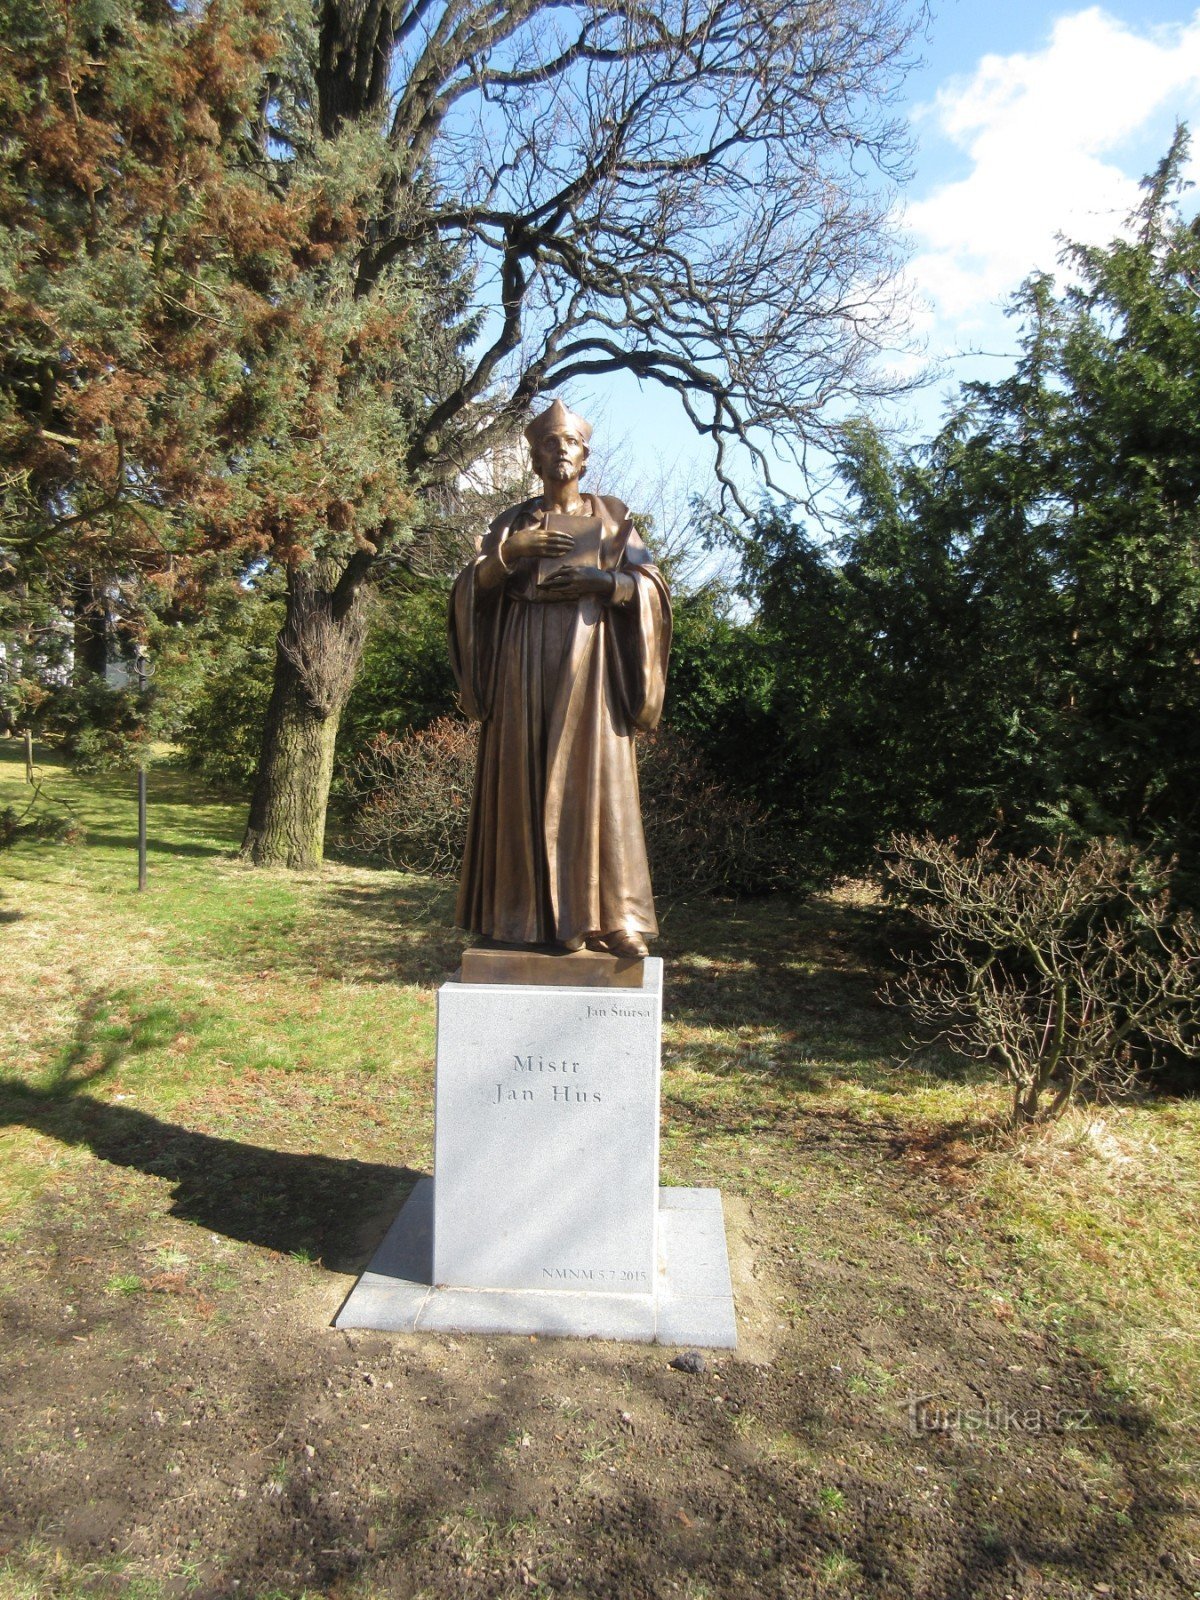 Master Jan Hus near the Evangelical church